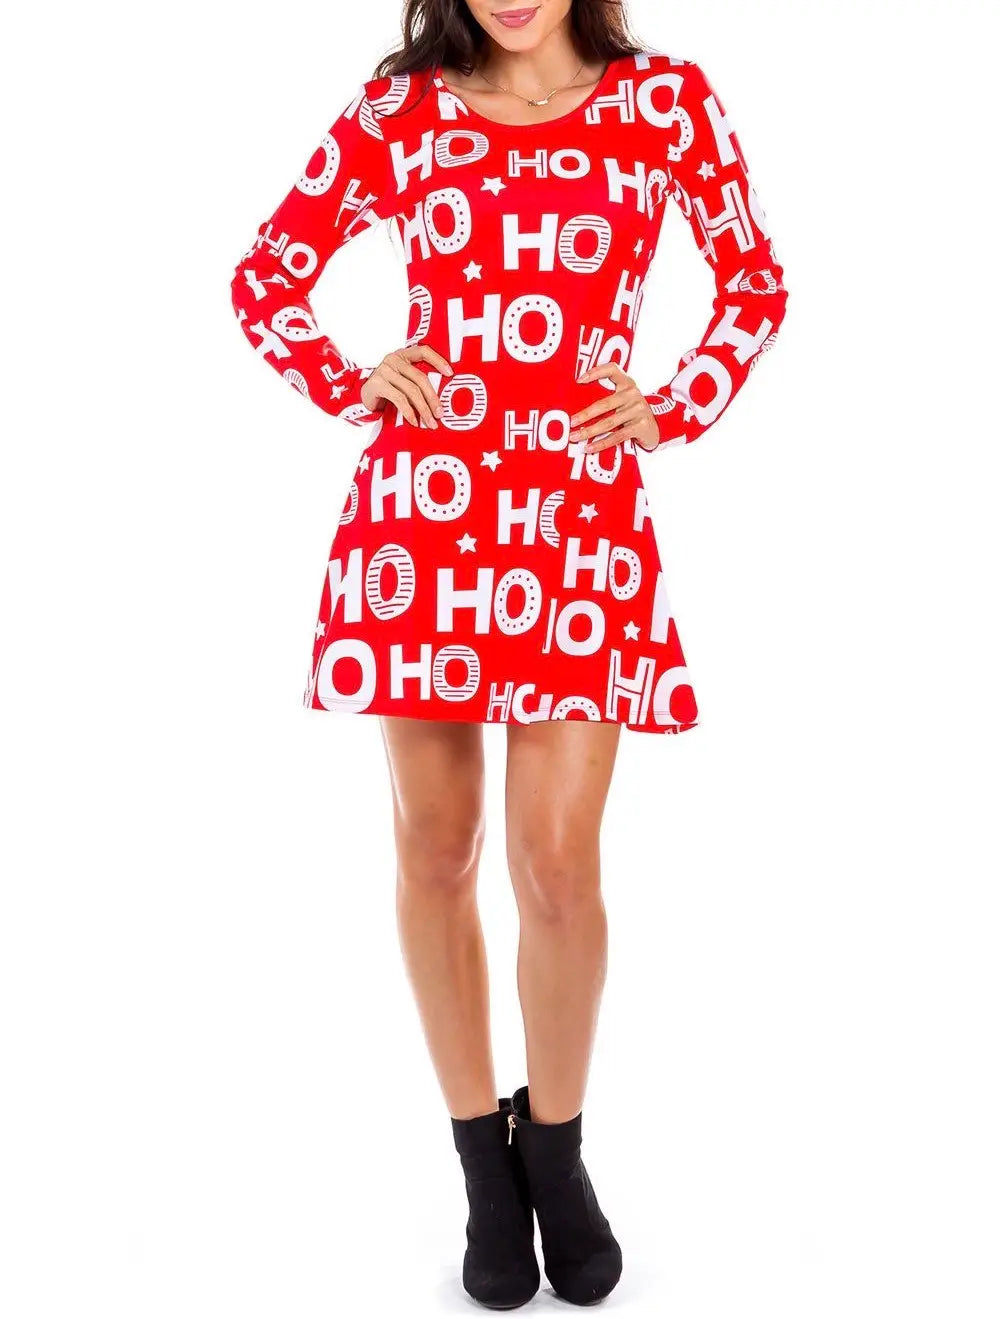 Women's Ho Ho Ho Red Christmas Dress